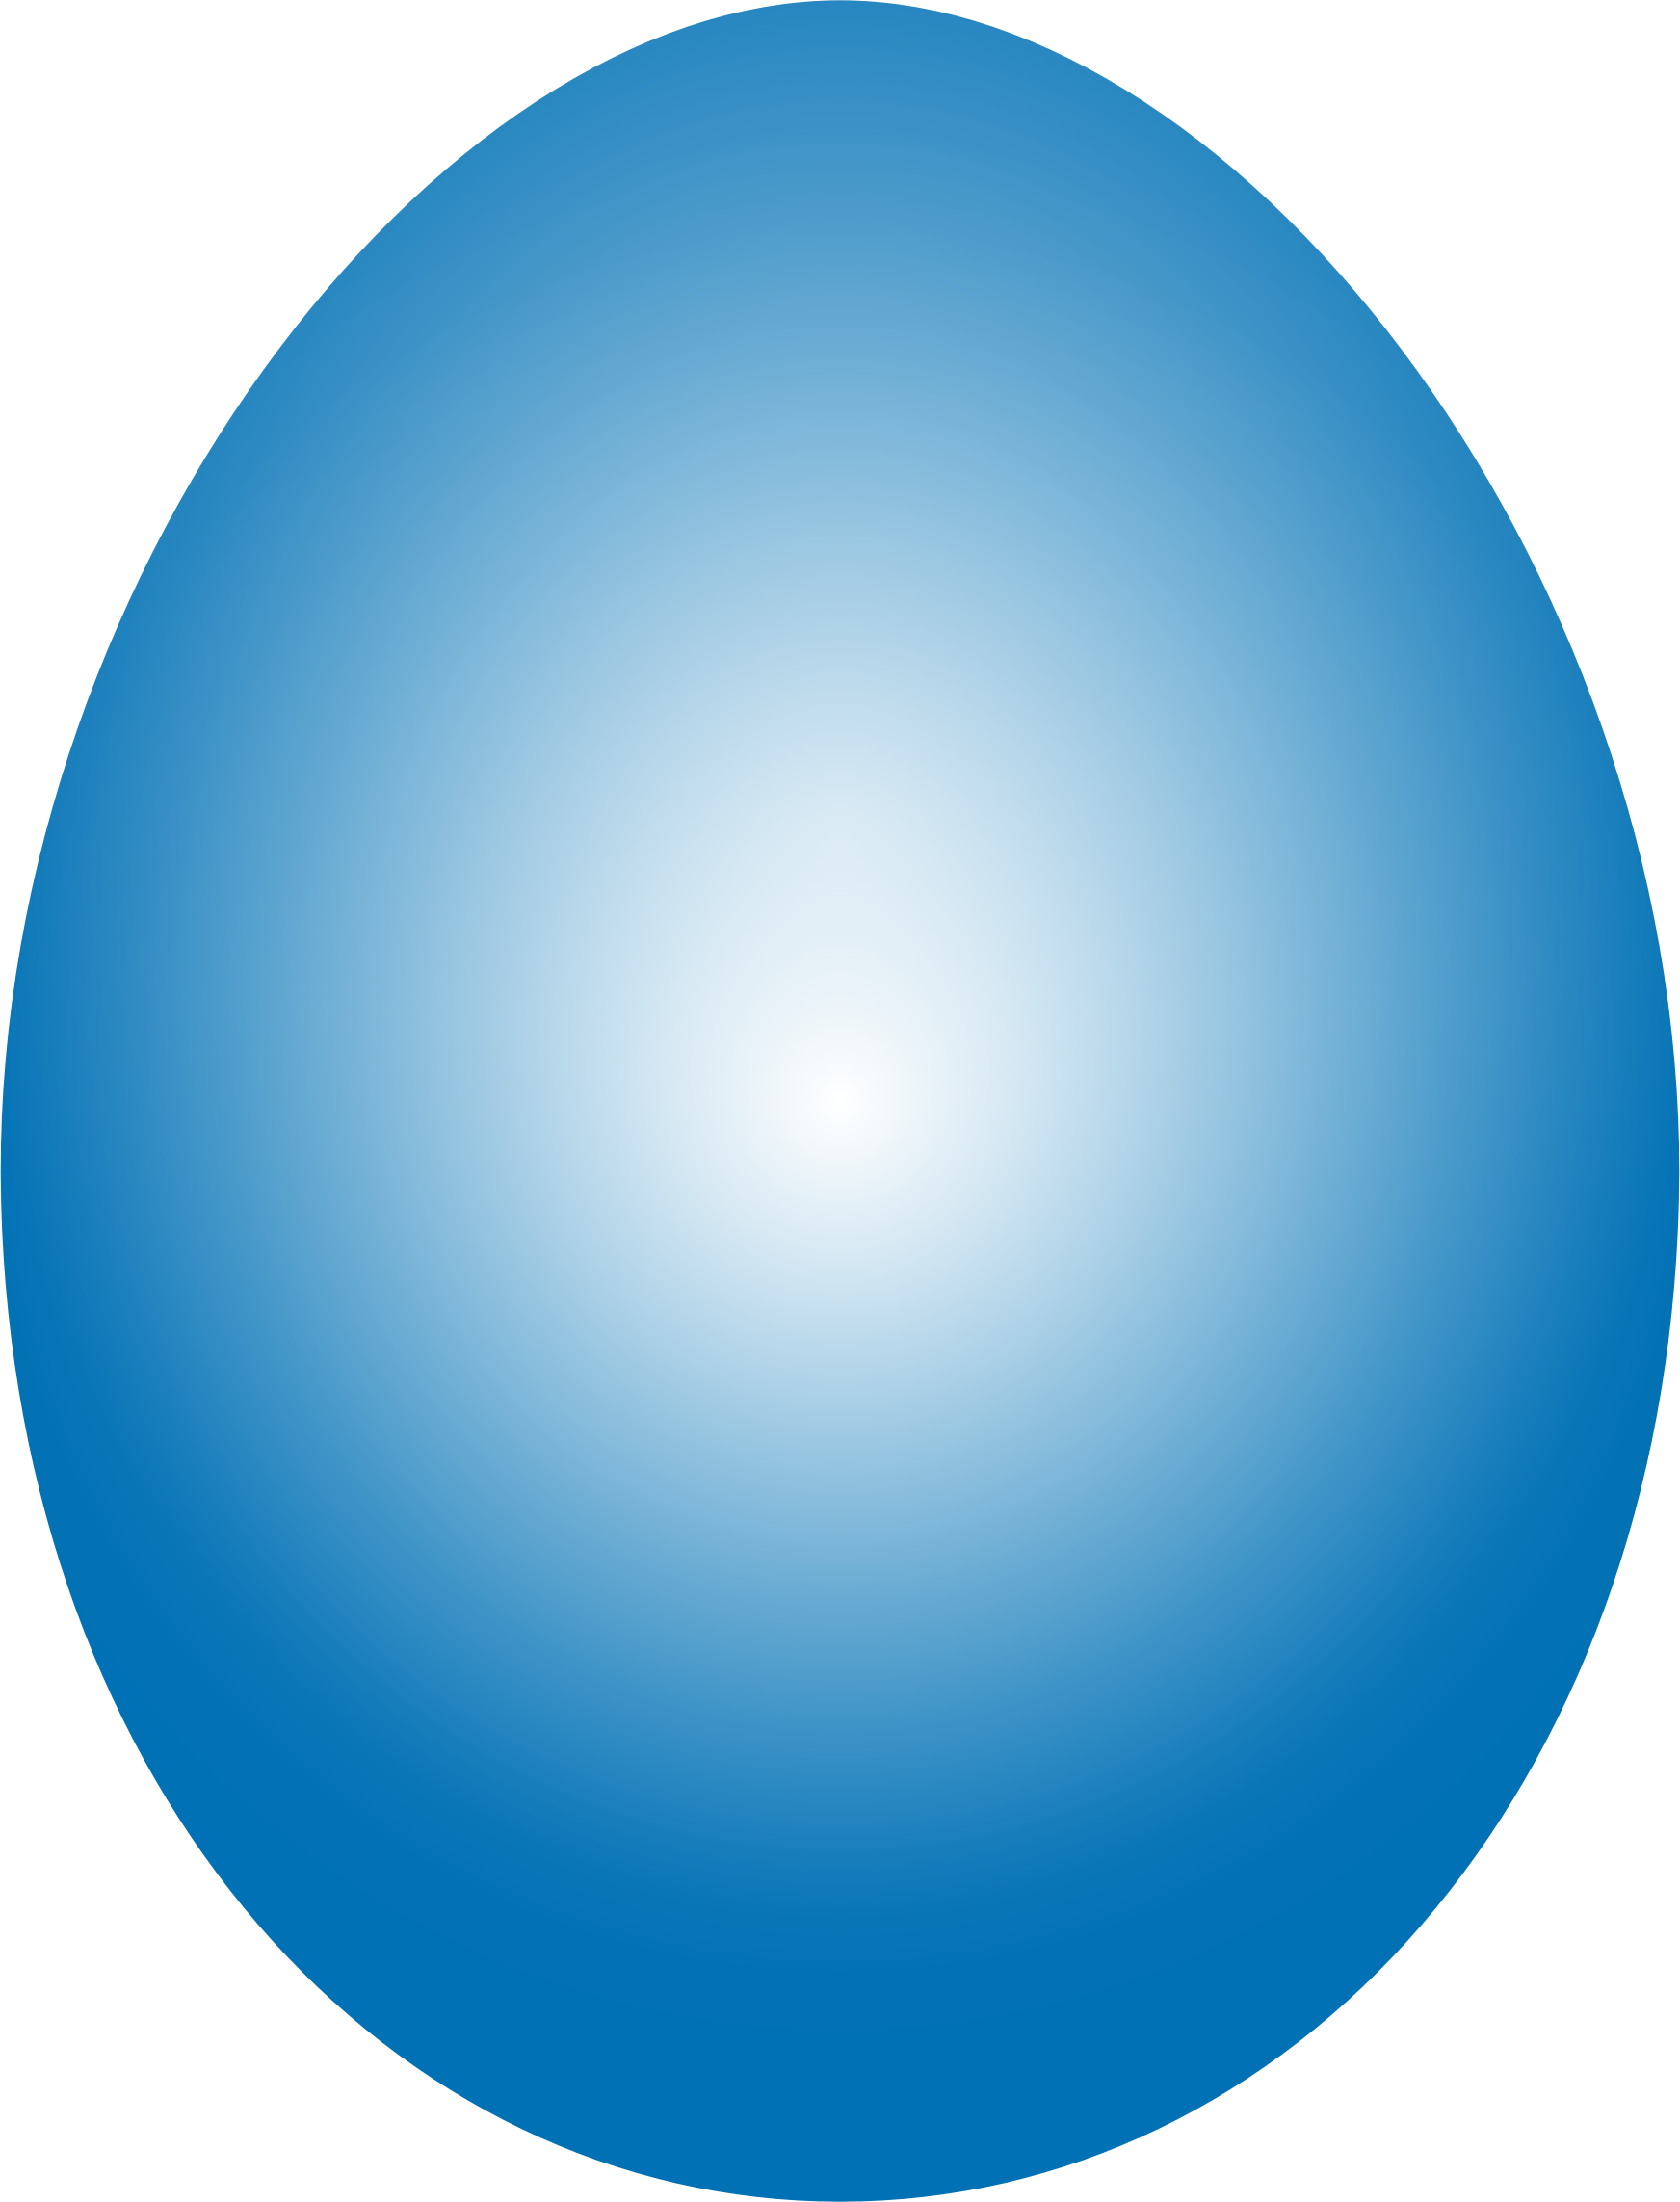 Blue Plain Easter Egg Photos PNG Image